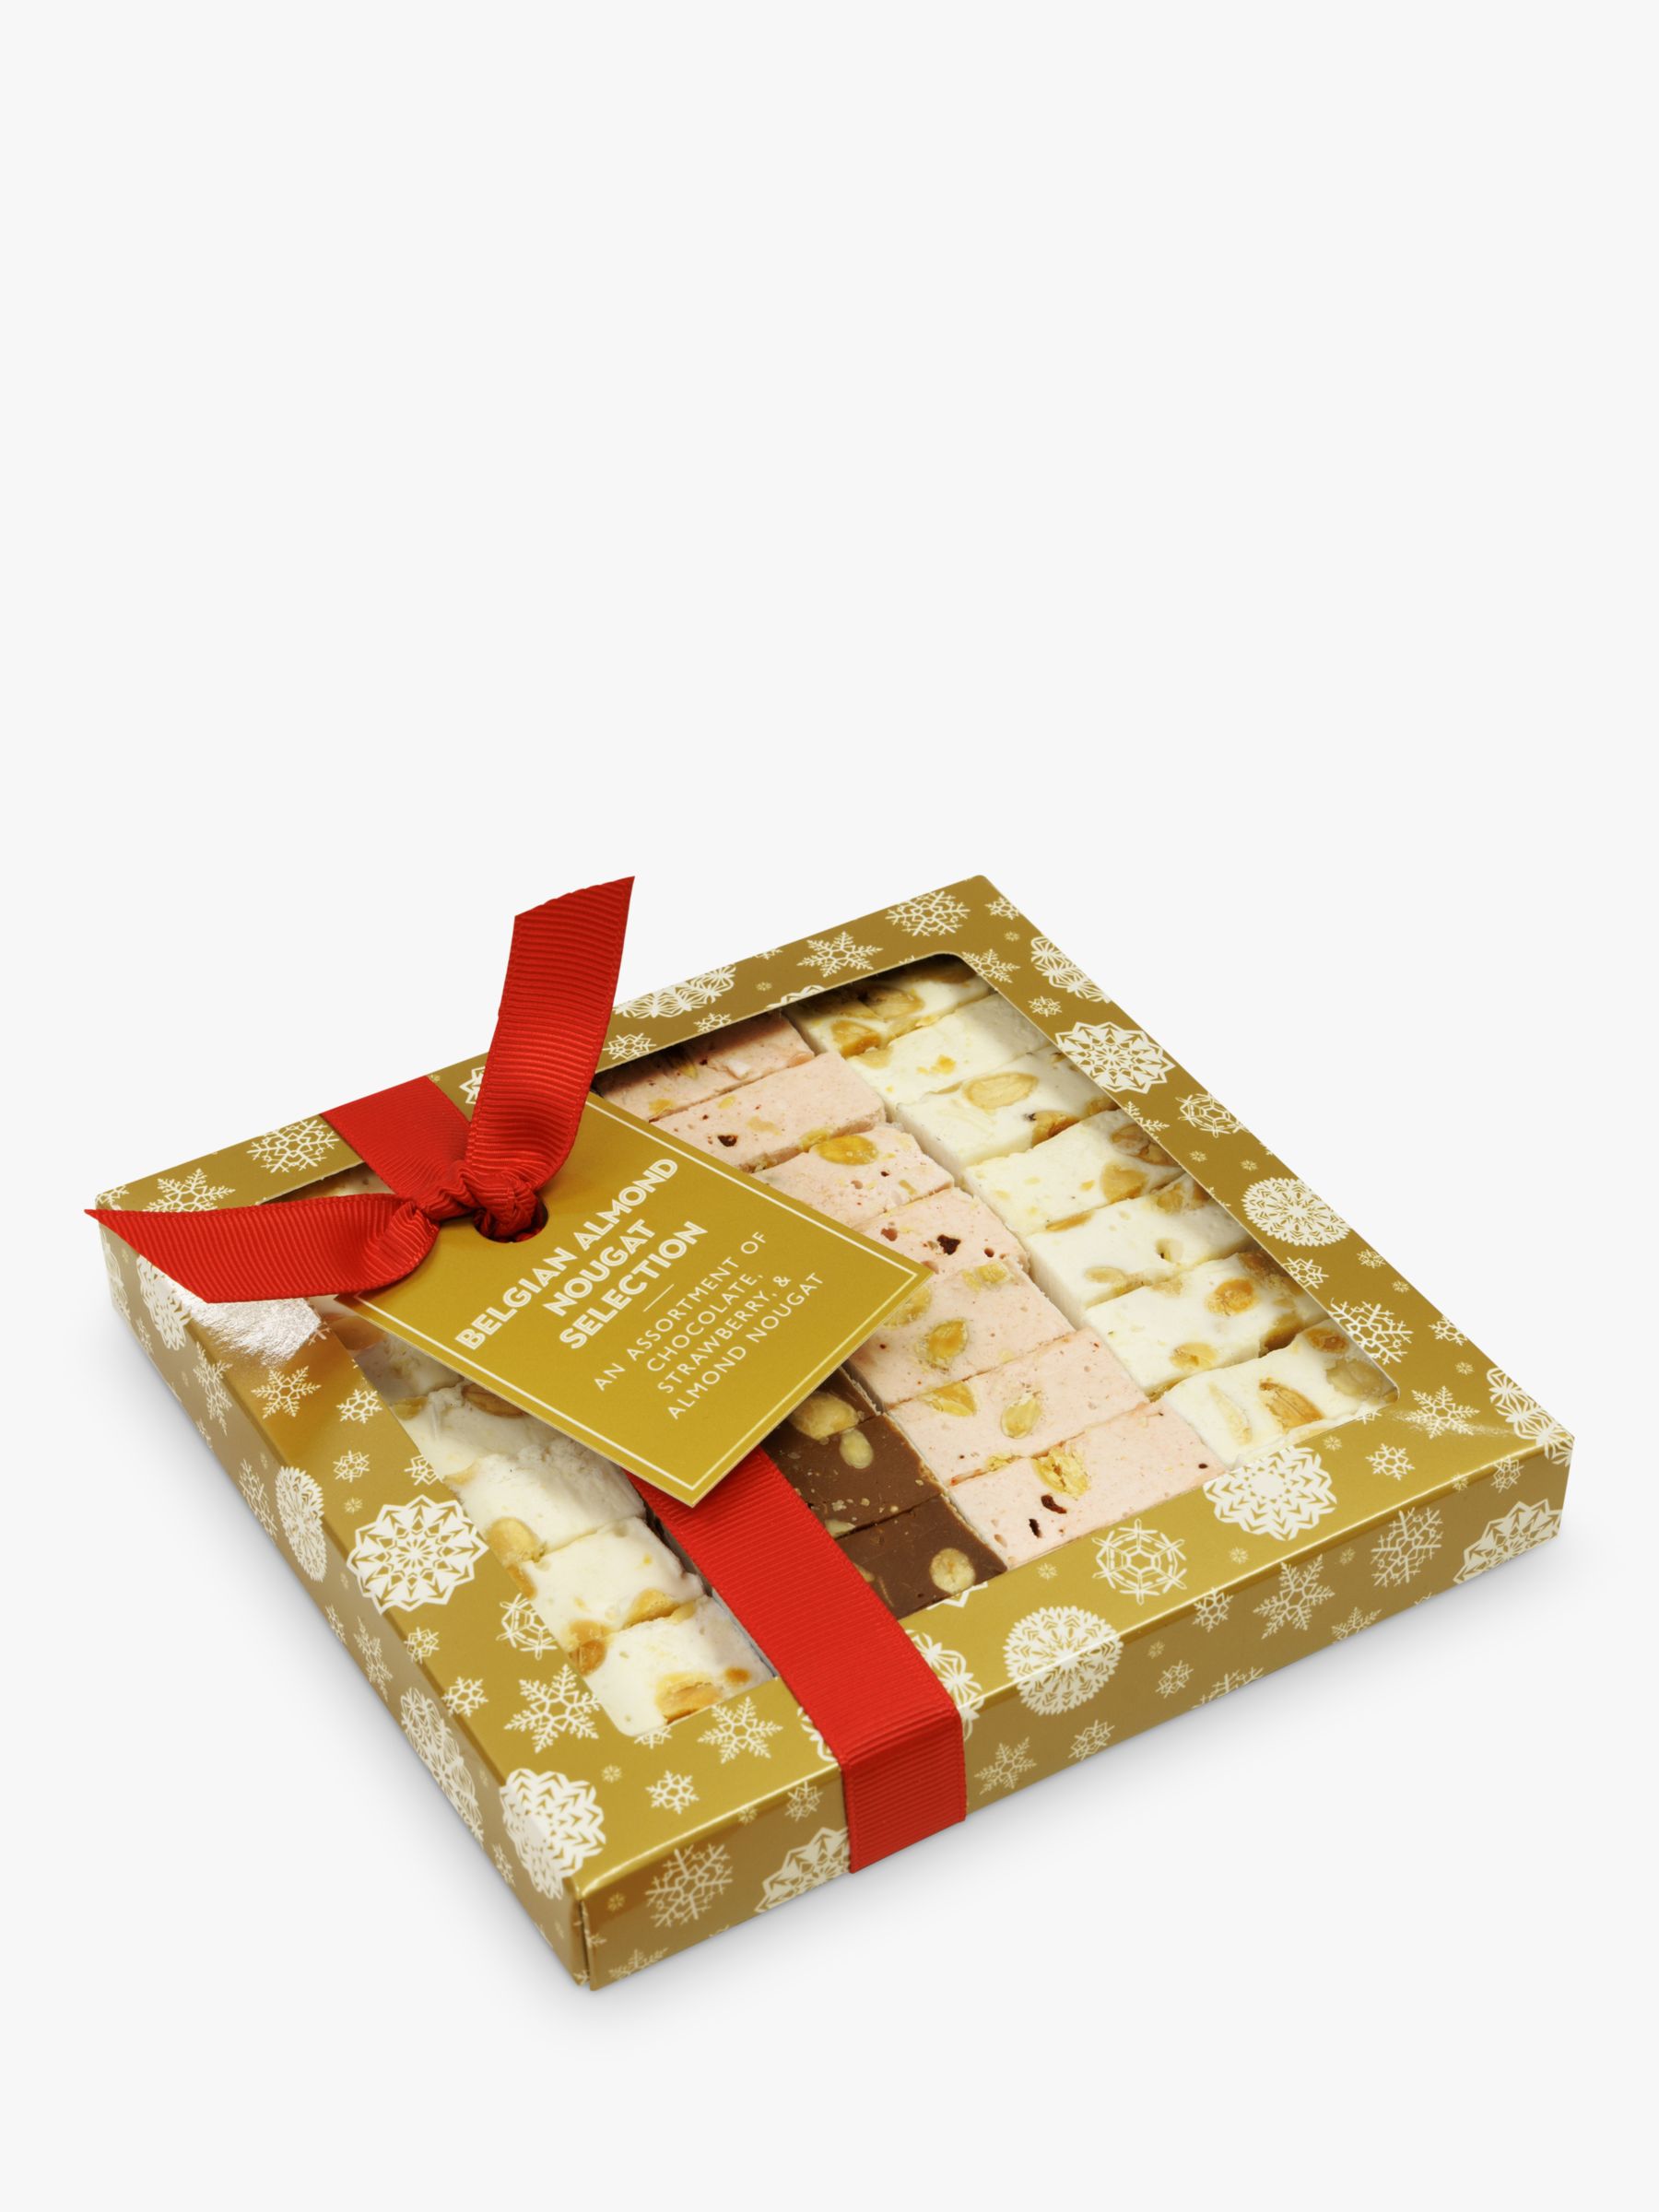 Natalie Almond Nougat Selection Gift Box, 250g